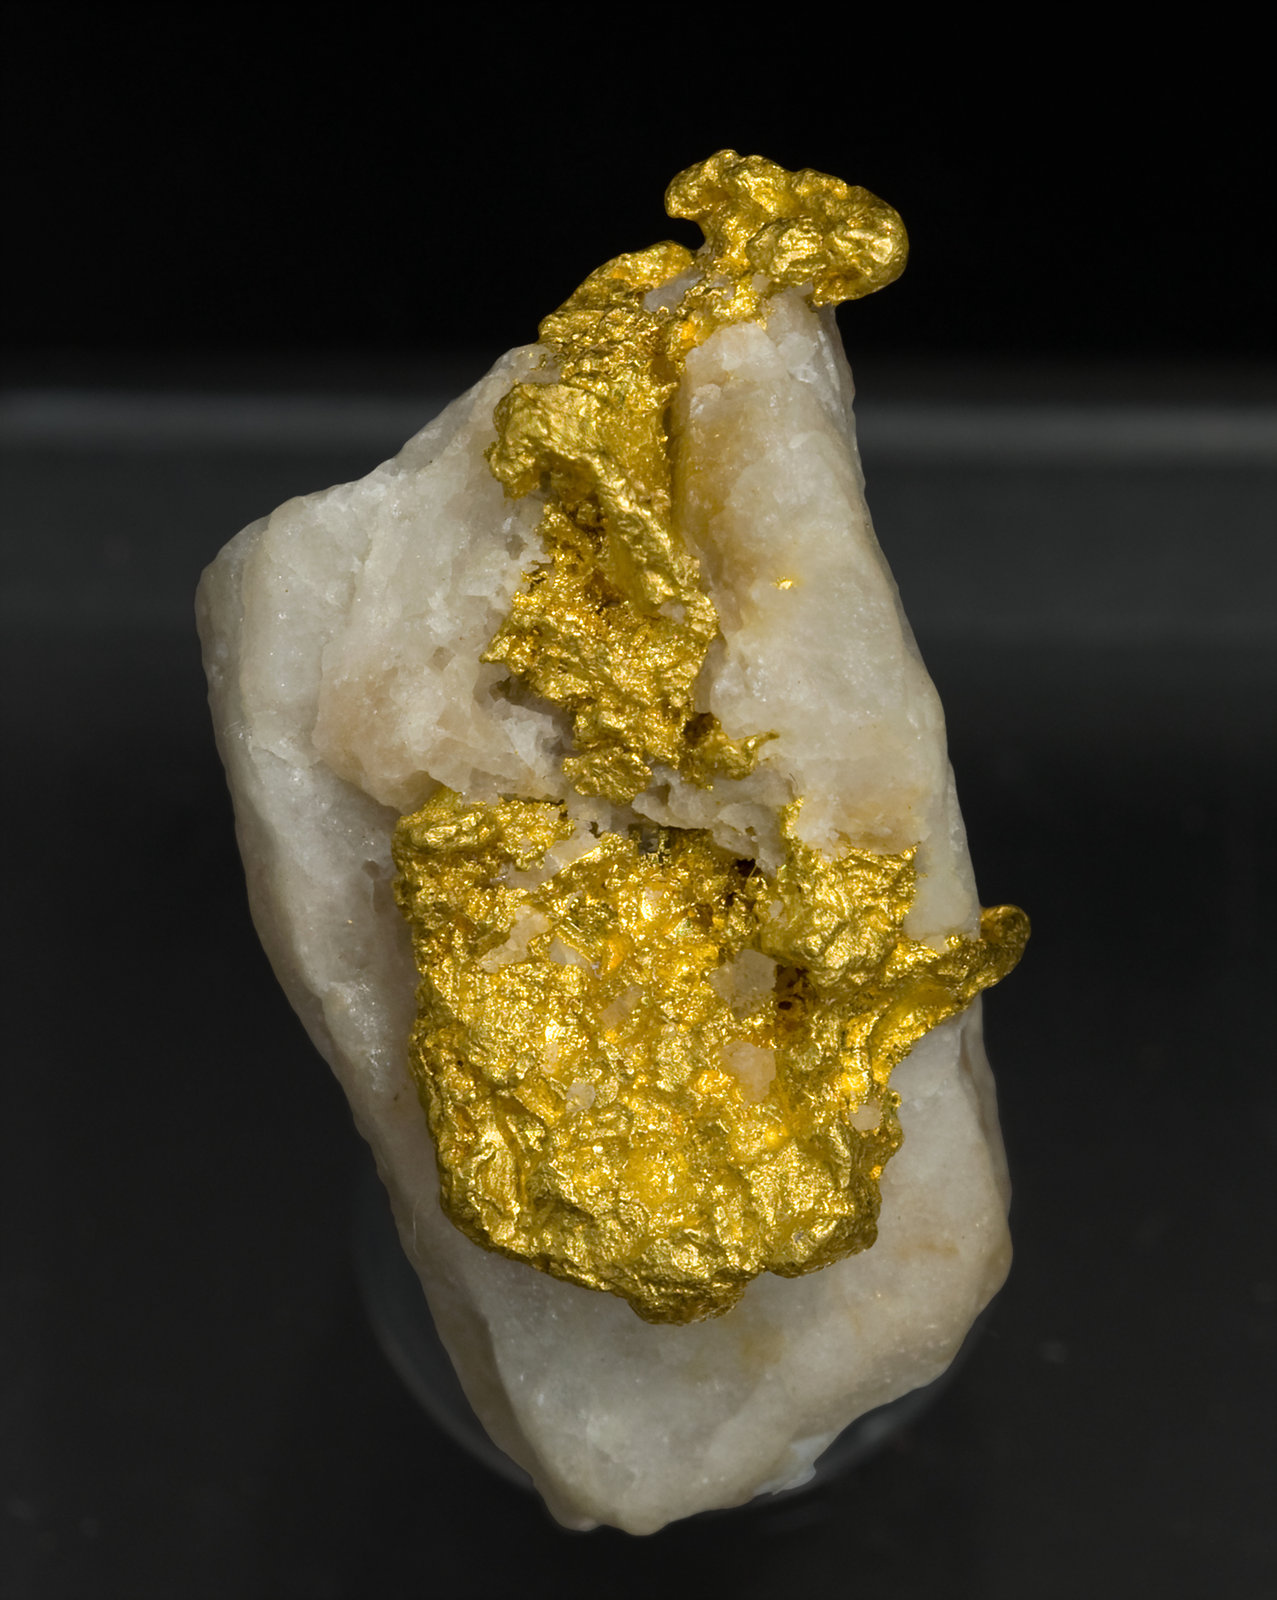 specimens/s_imagesS1/Gold-MJ98S1t.jpg